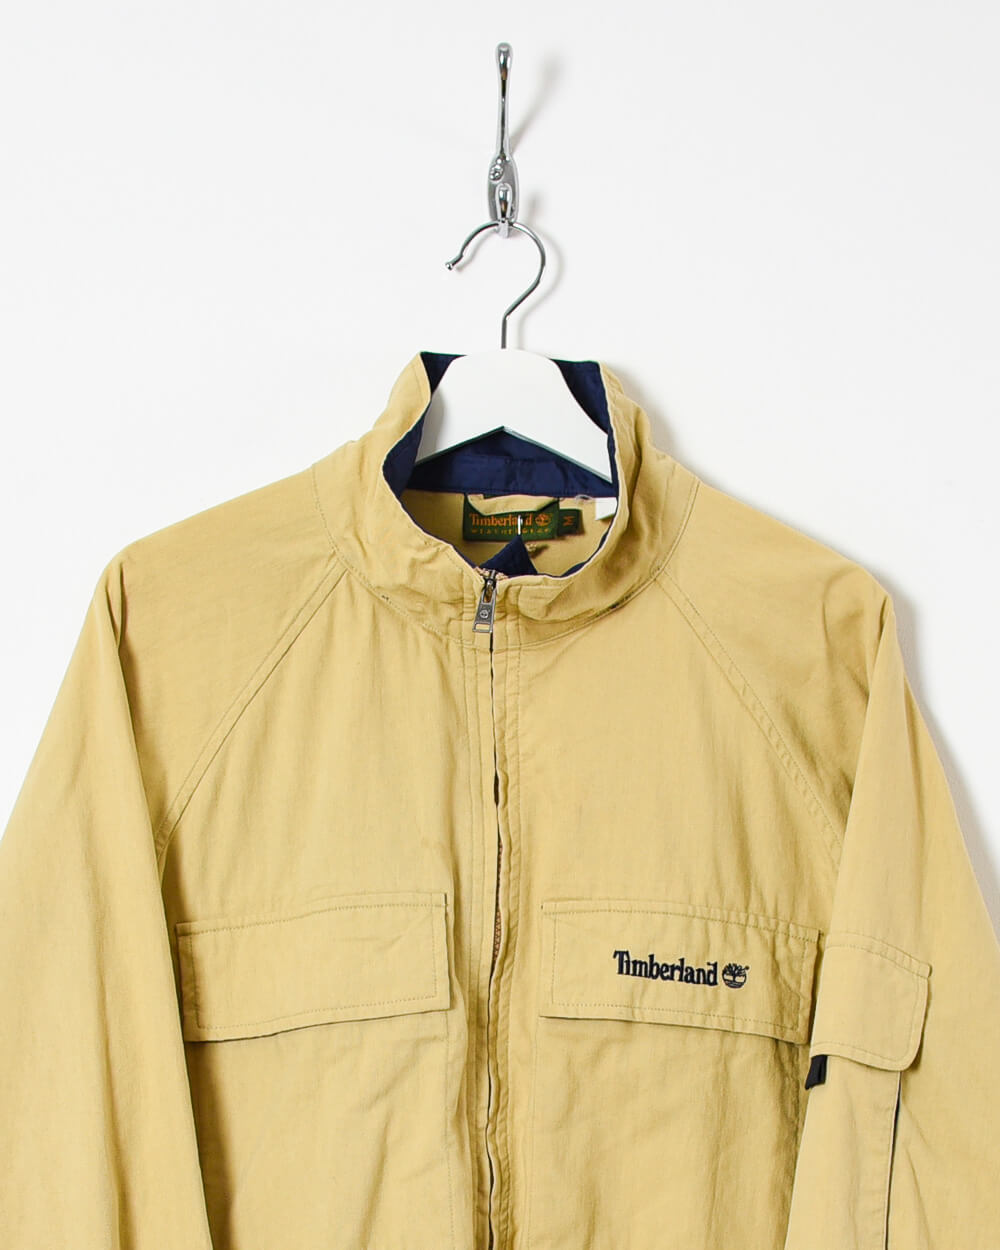 Timberland Jacket - Medium - Domno Vintage 90s, 80s, 00s Retro and Vintage Clothing 